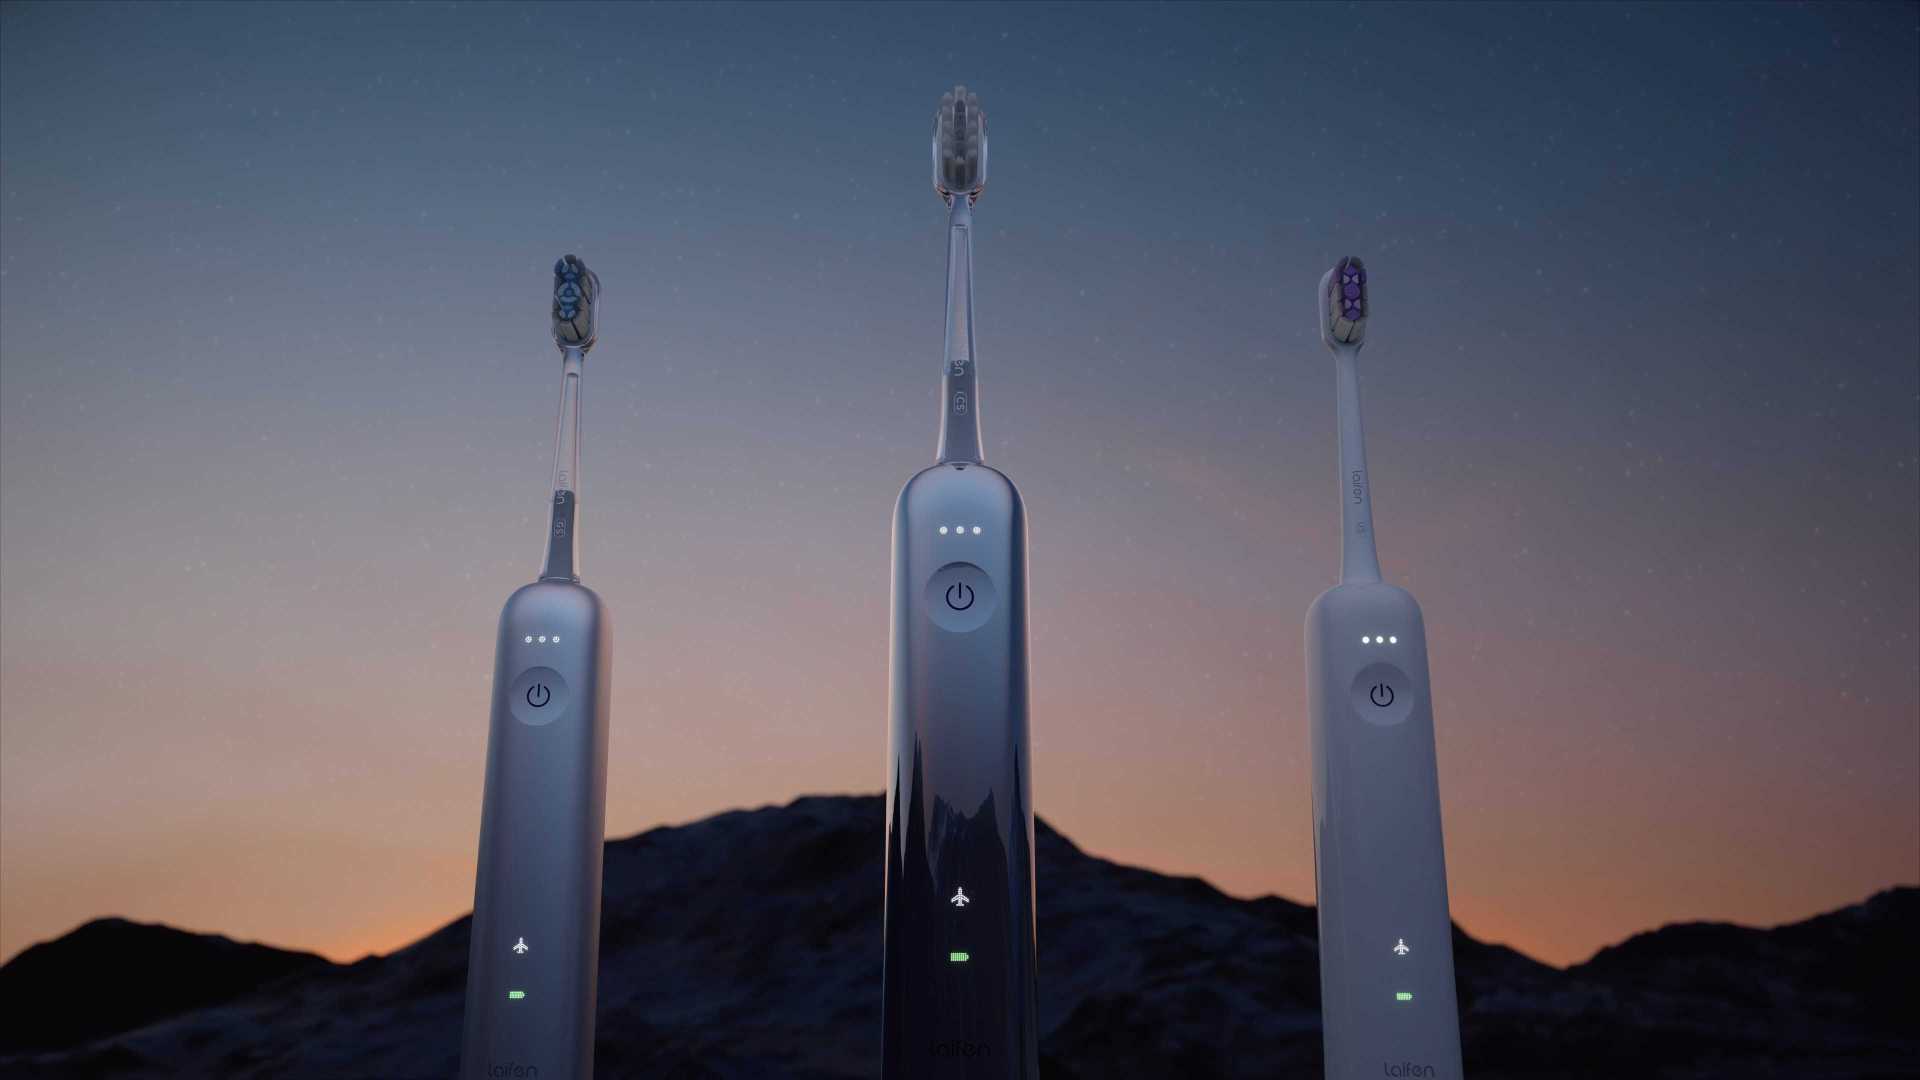 laifen 徕芬扫振电动牙刷-创造一场刷牙革命